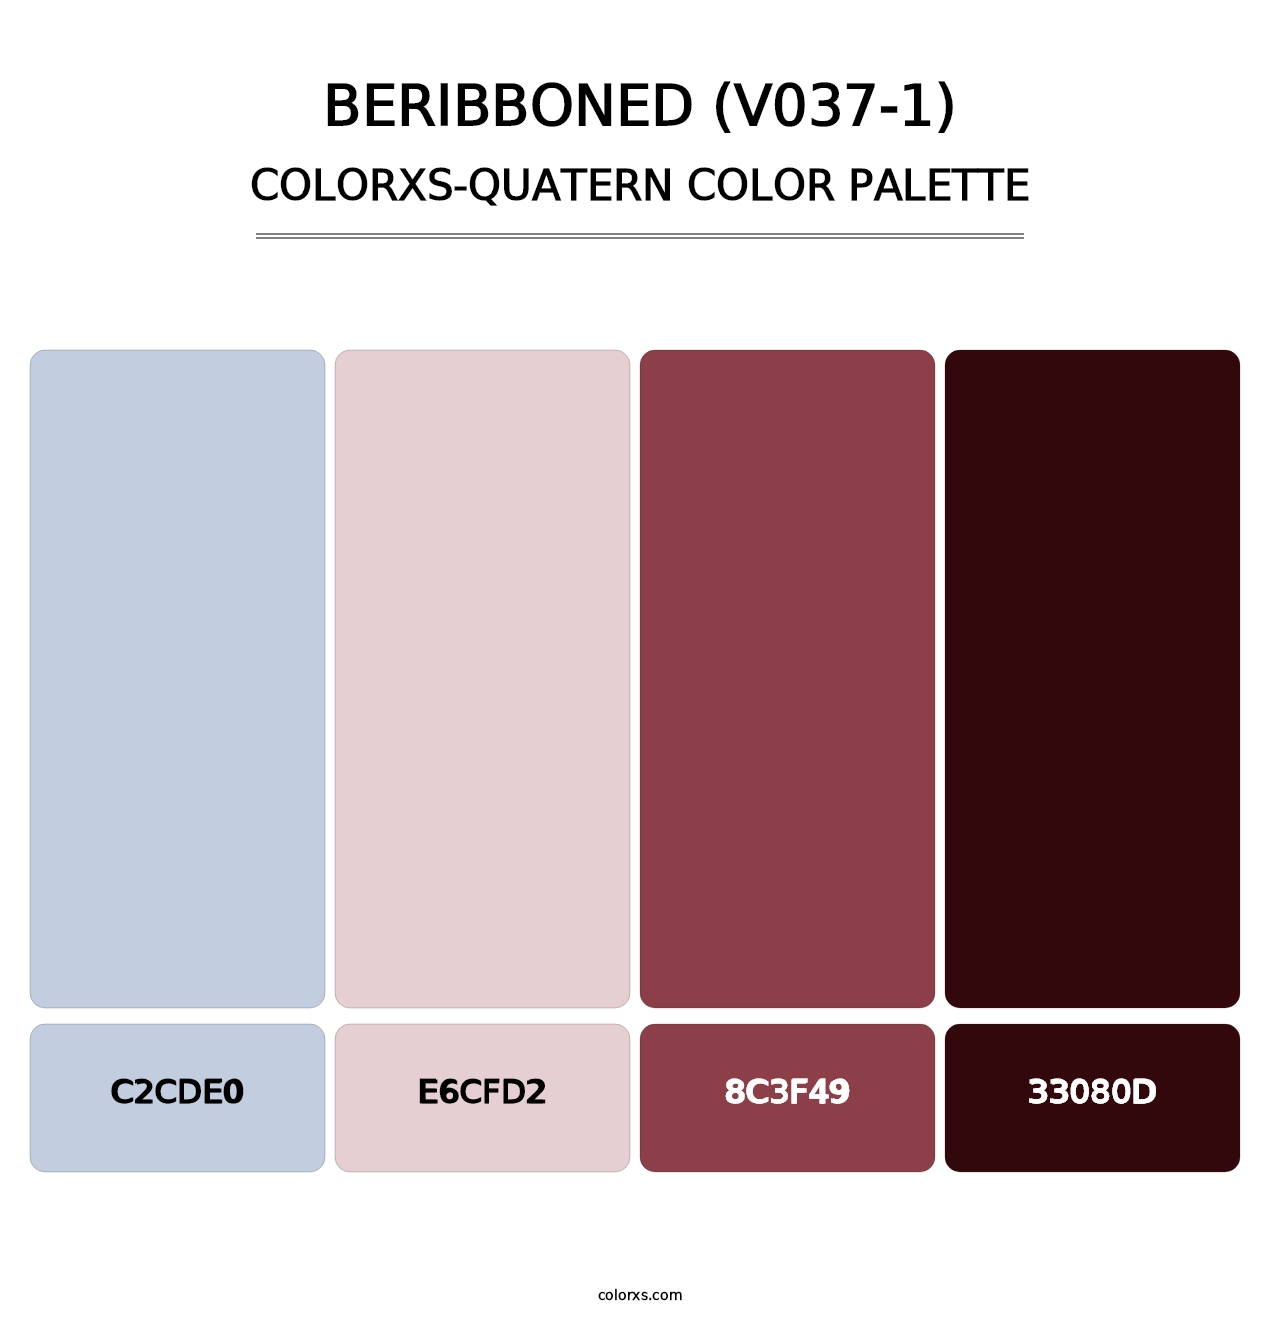 Beribboned (V037-1) - Colorxs Quatern Palette